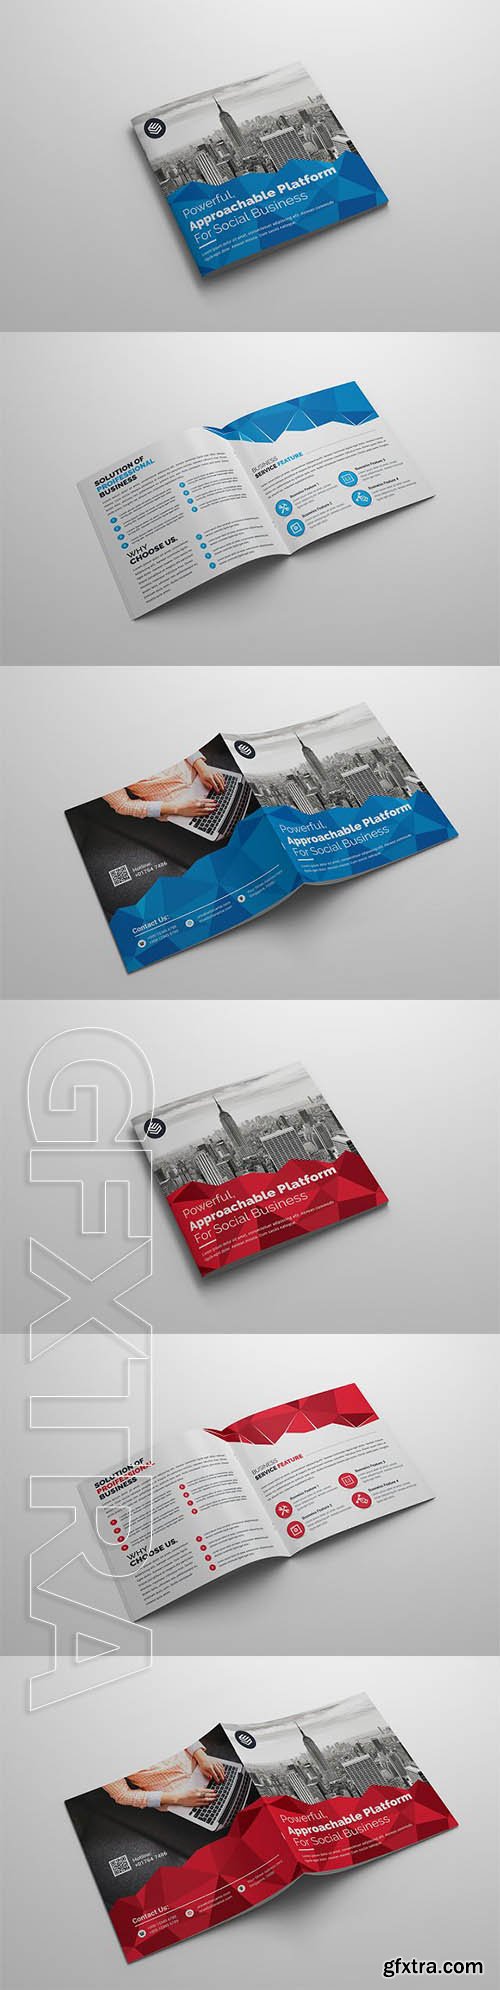 CreativeMarket - Square Bi-Fold Brochure 2095173